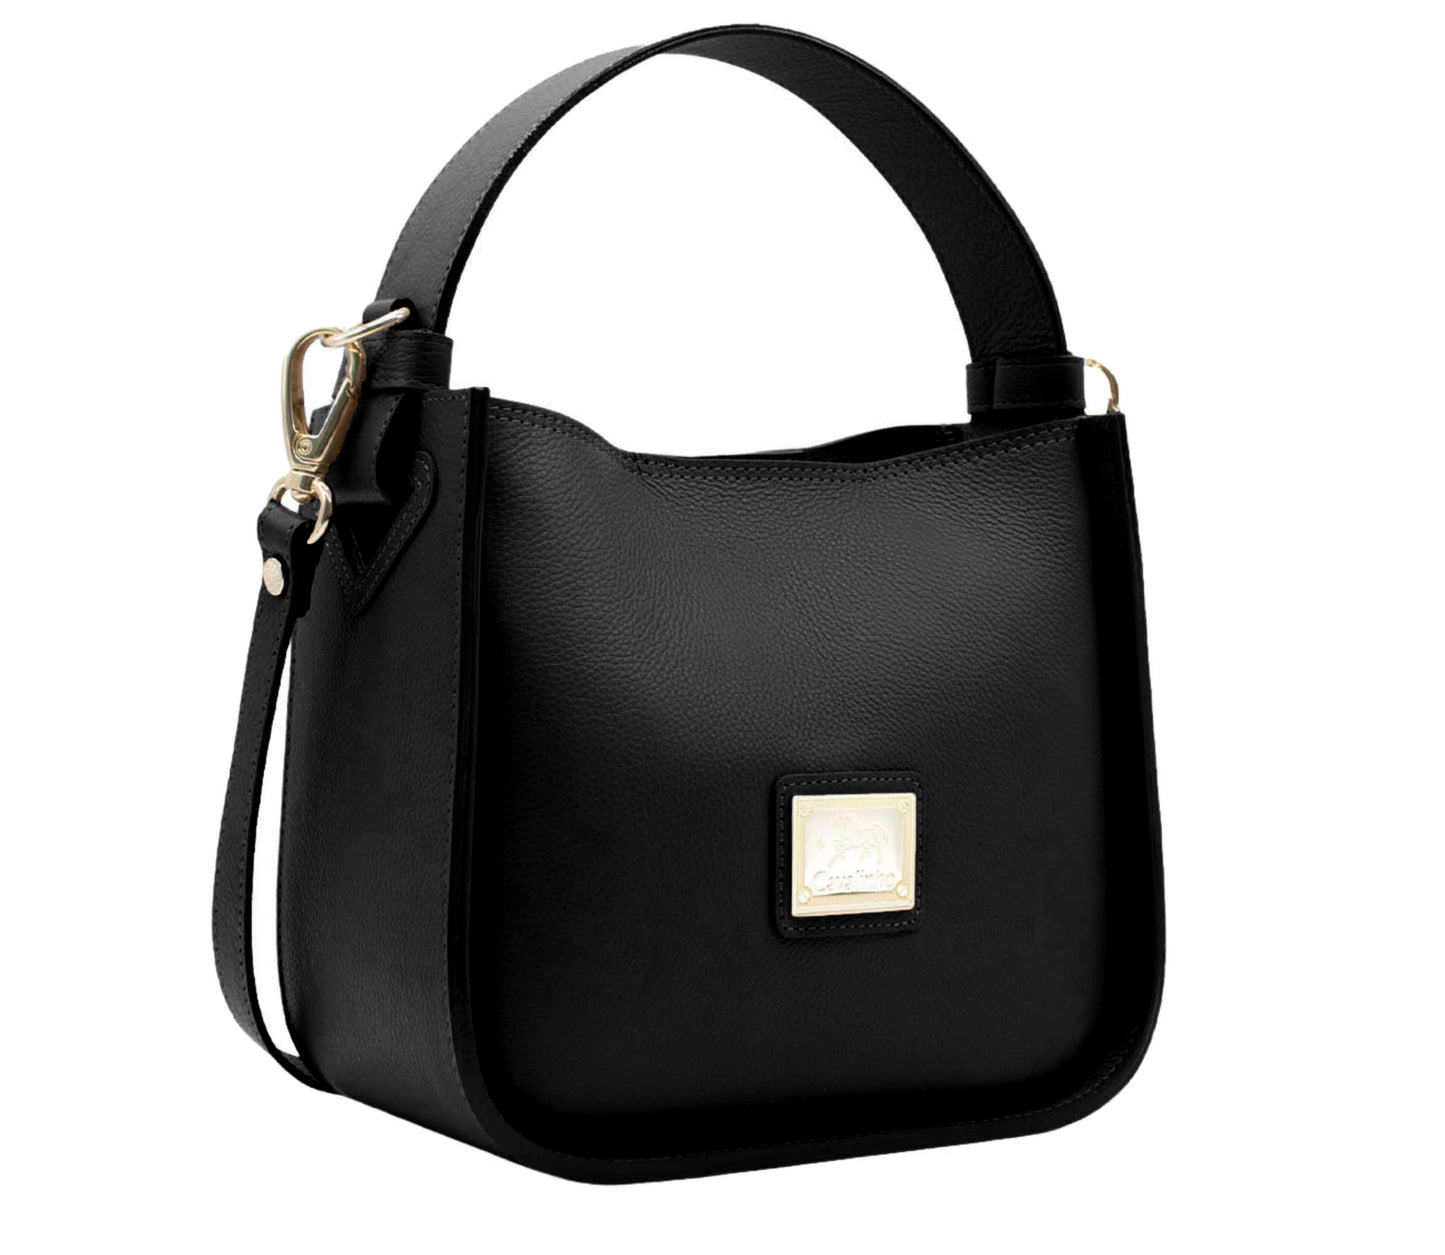 Cavalinho Muse Leather Handbag - Black - 18300475.01.99_2